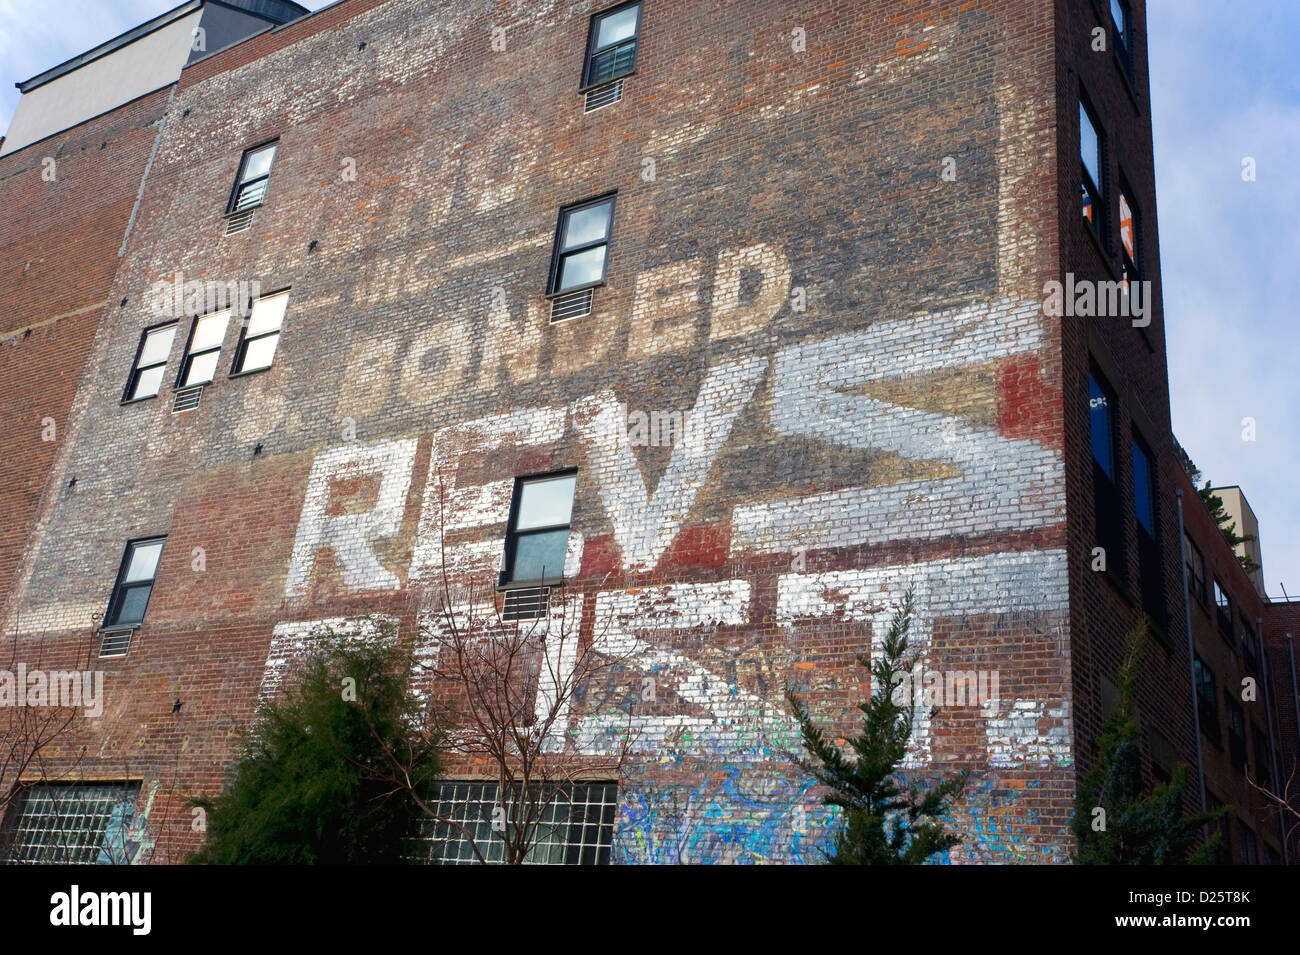 An old bonded warehouse alongside the High Line park in Manhattan, New York, USA. Stock Photo